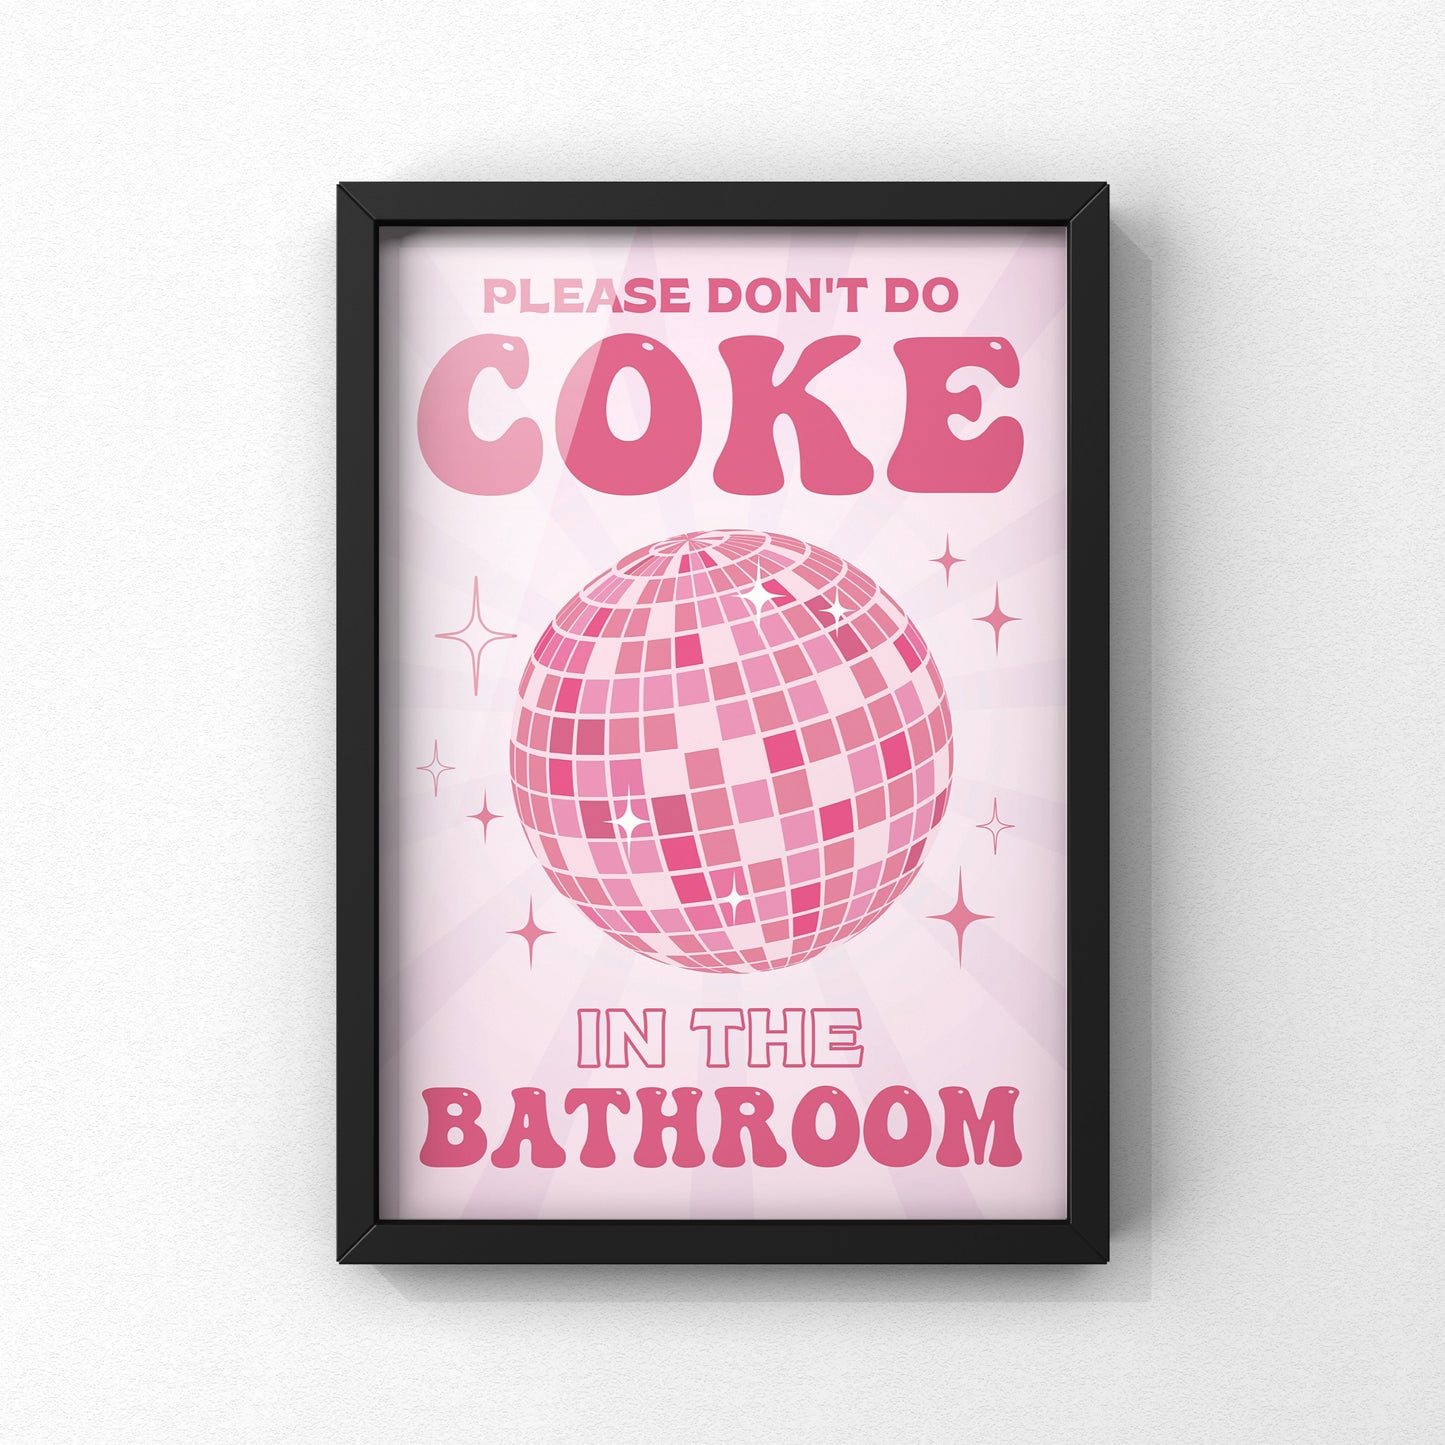 Coke in the bathroom